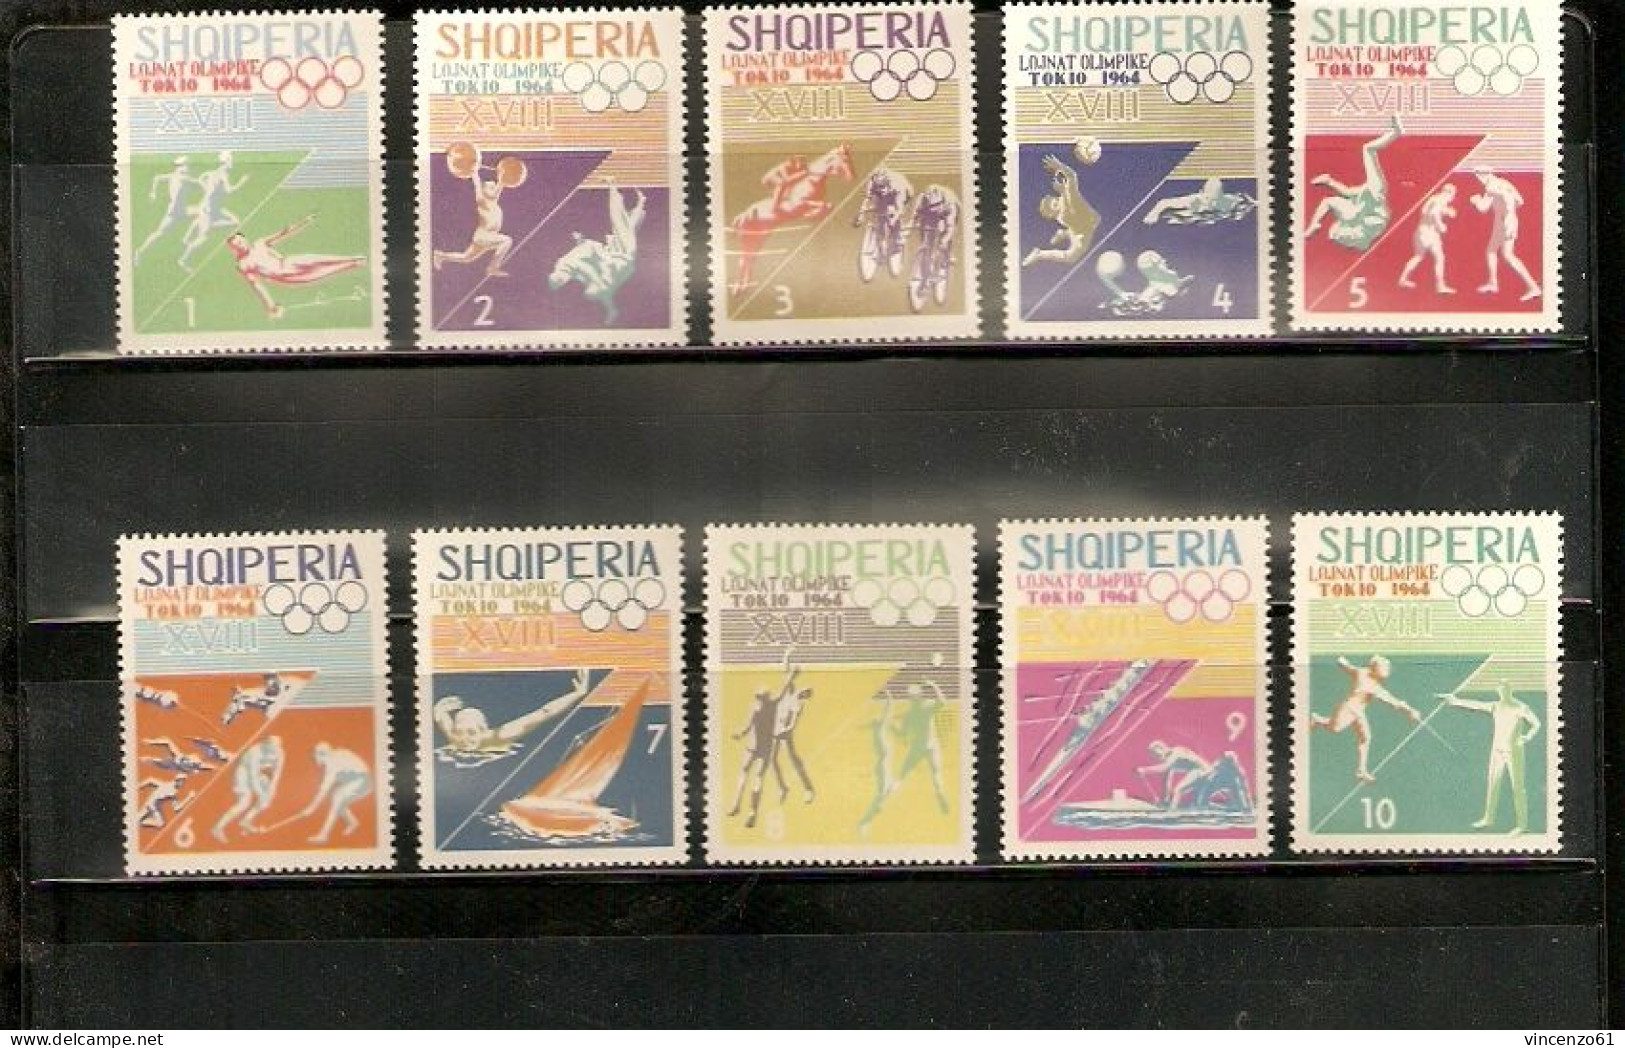 SHQIPERIA COMPLETE SERIE TOKIO 1964 OLIMPIC GAMES - Sommer 1964: Tokio